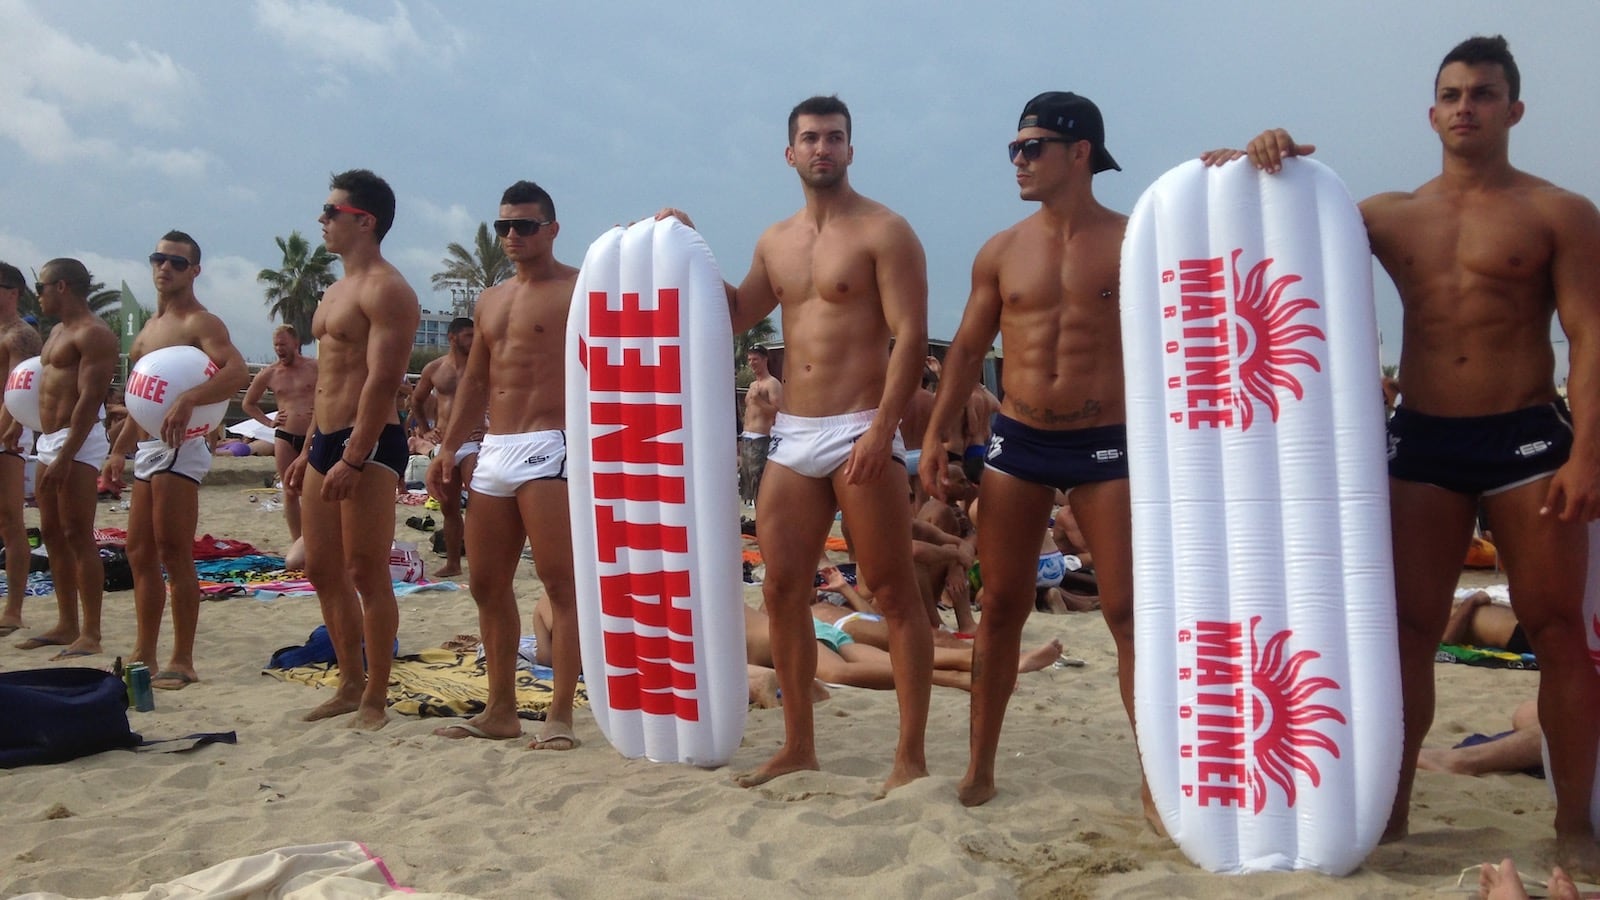 Boys in ES Speedos on Marbella gay beach in Barcelona.